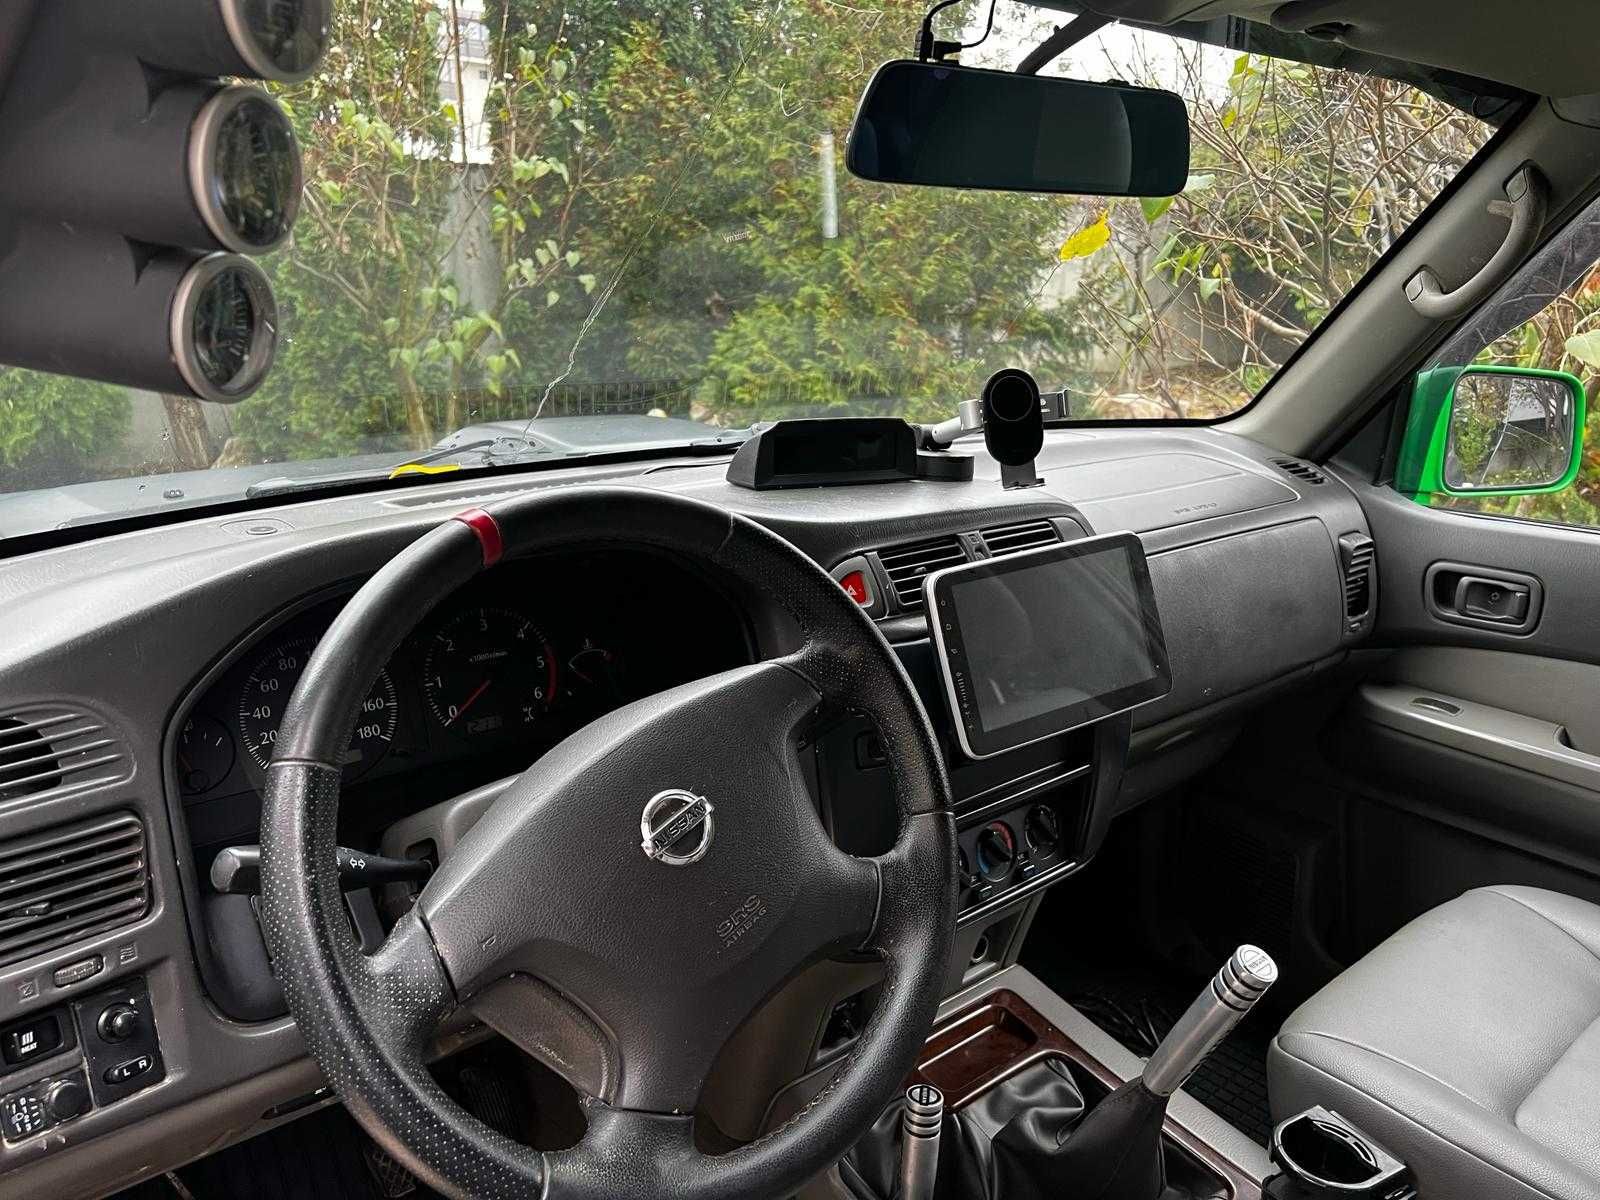 Nissan Patrol Y61 3.0D off road